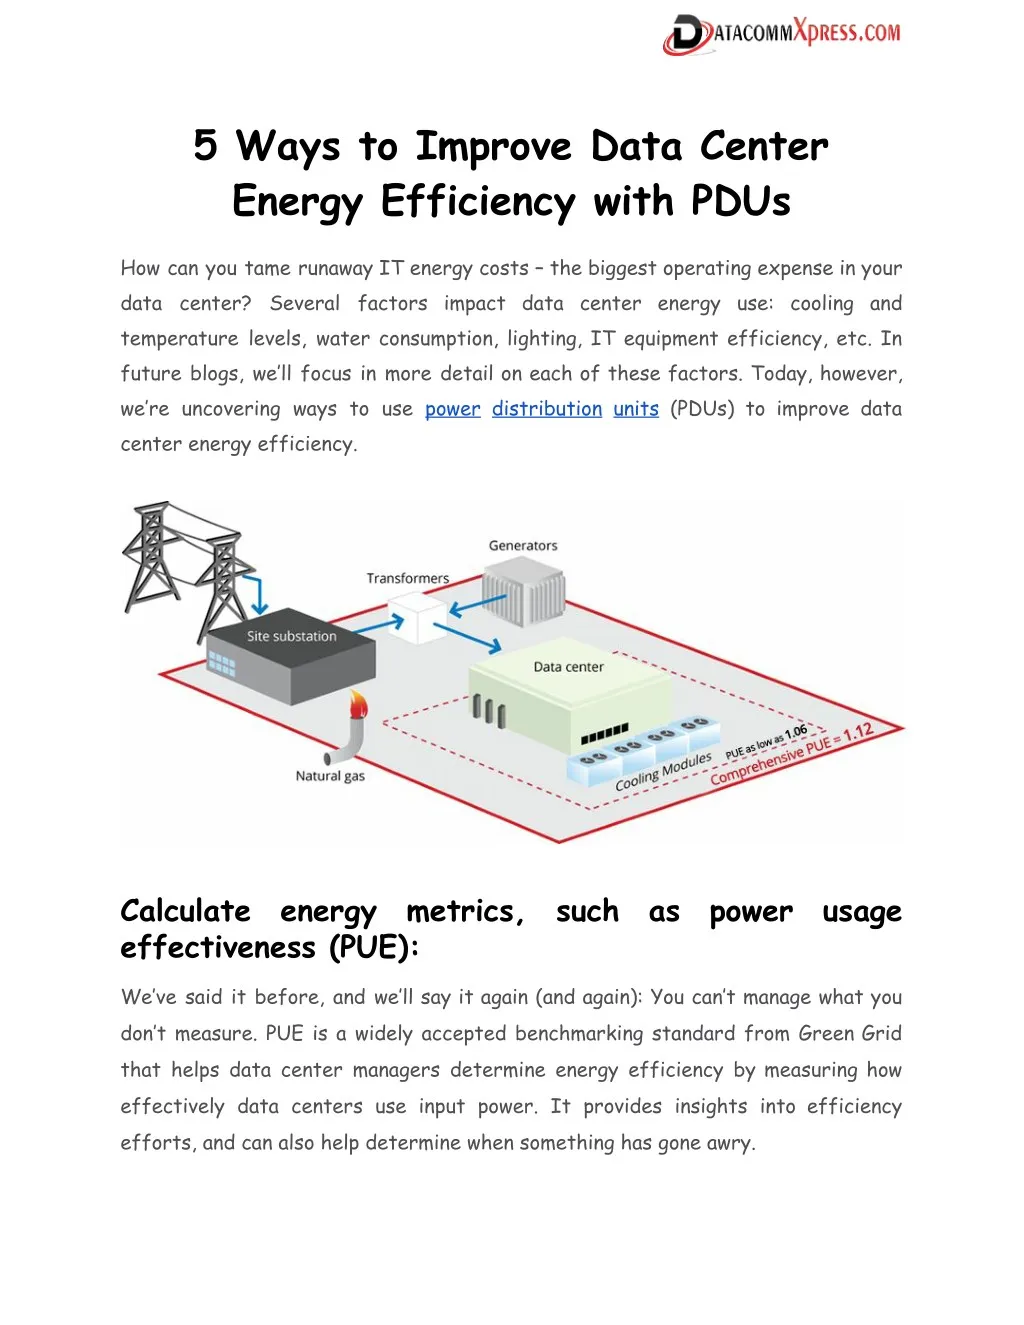 5 ways to improve data center energy efficiency